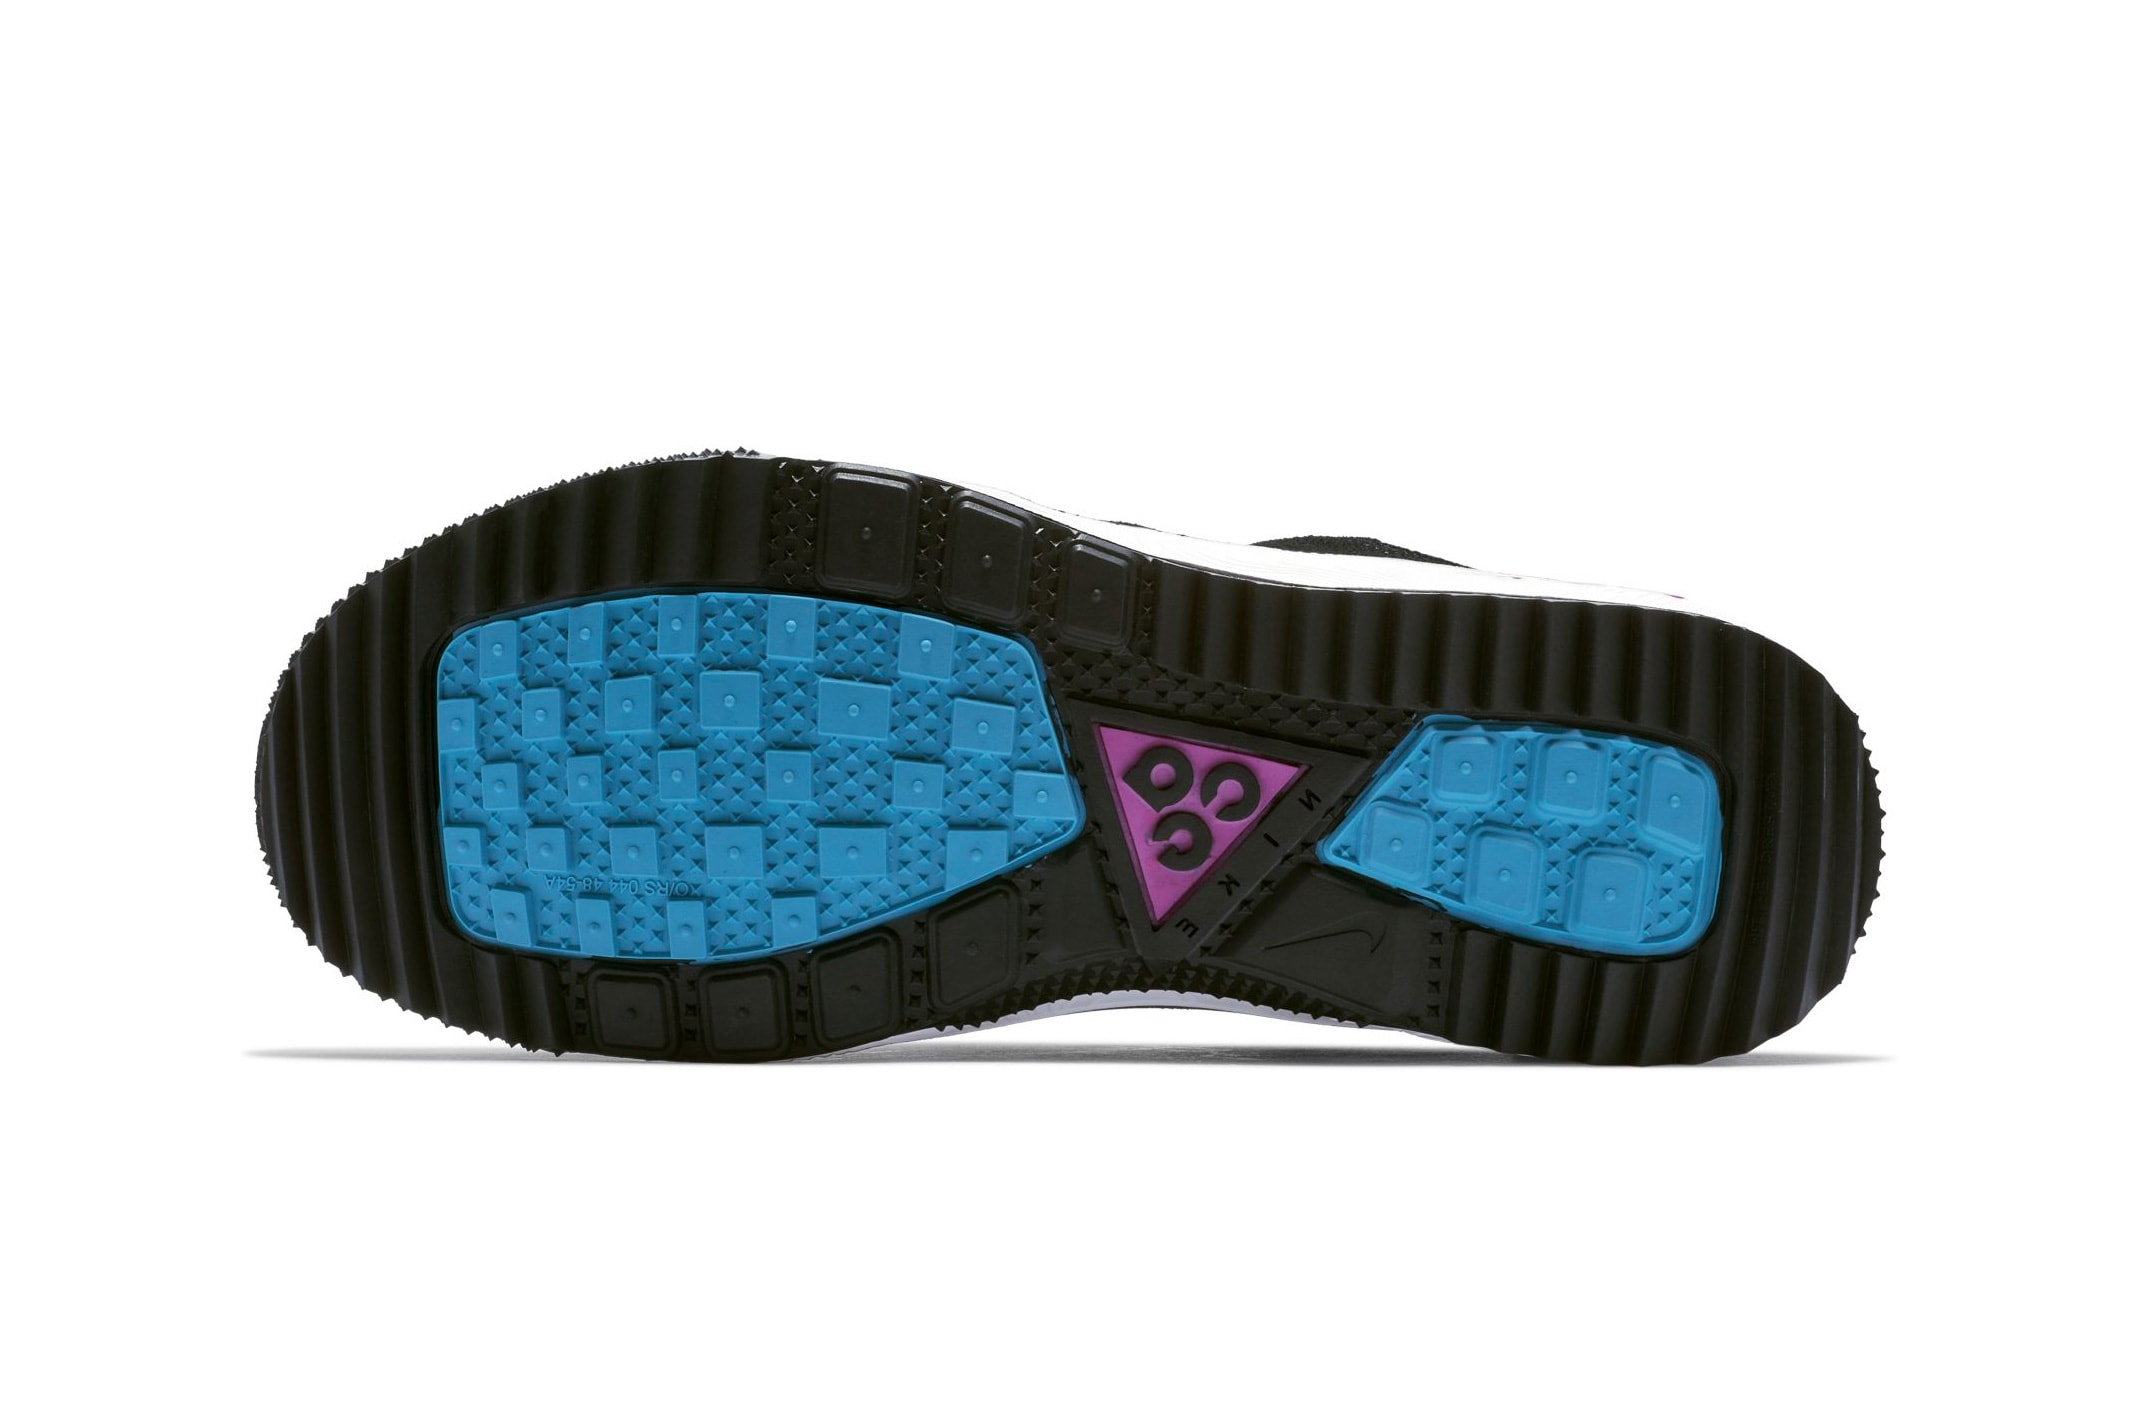 Nike ACG Dog Mountain New Colorways trail sneakers hiking footwear green purple black